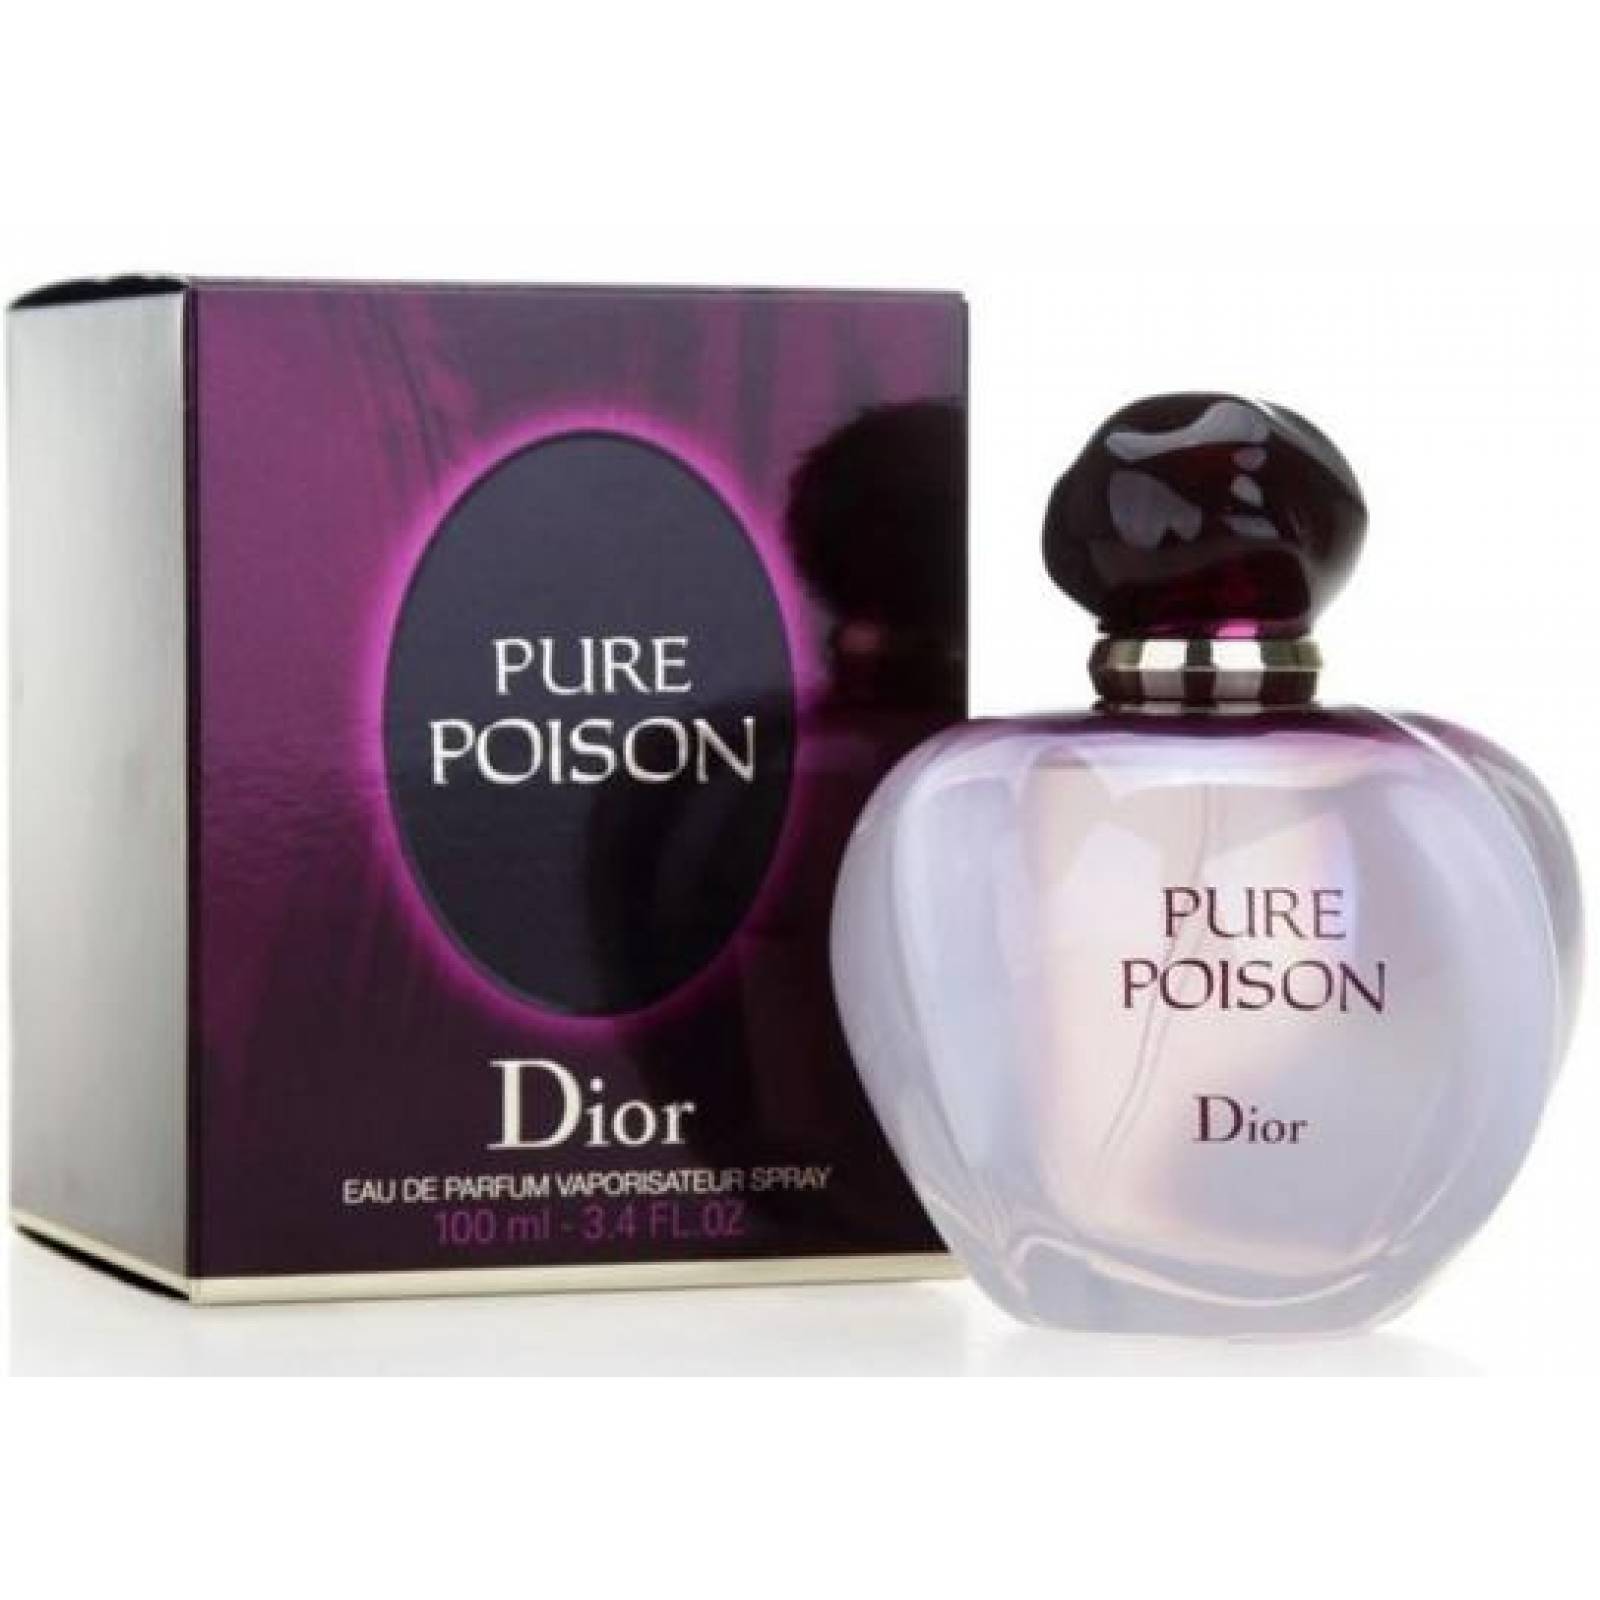 Pure Poison de Christian Dior Eau de Parfum 100 ml. Fragancia para Dama